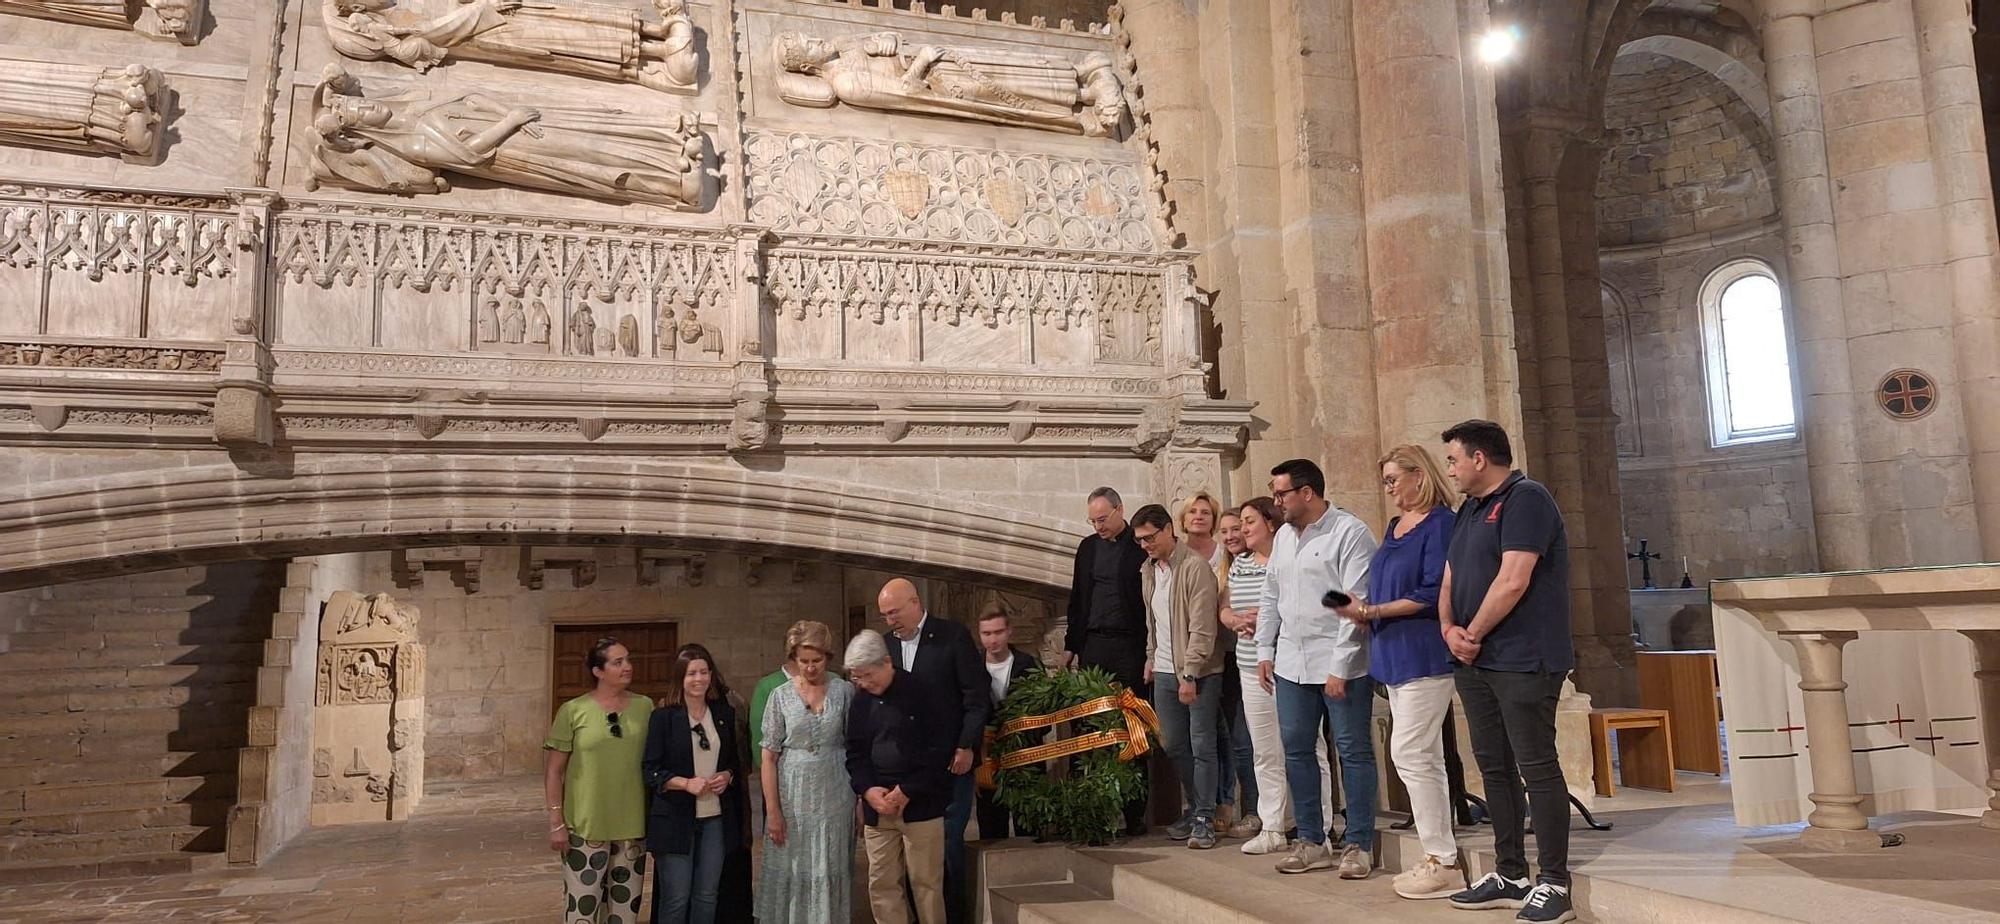 Las imágenes del homenaje  a Jaume I en Vila-real